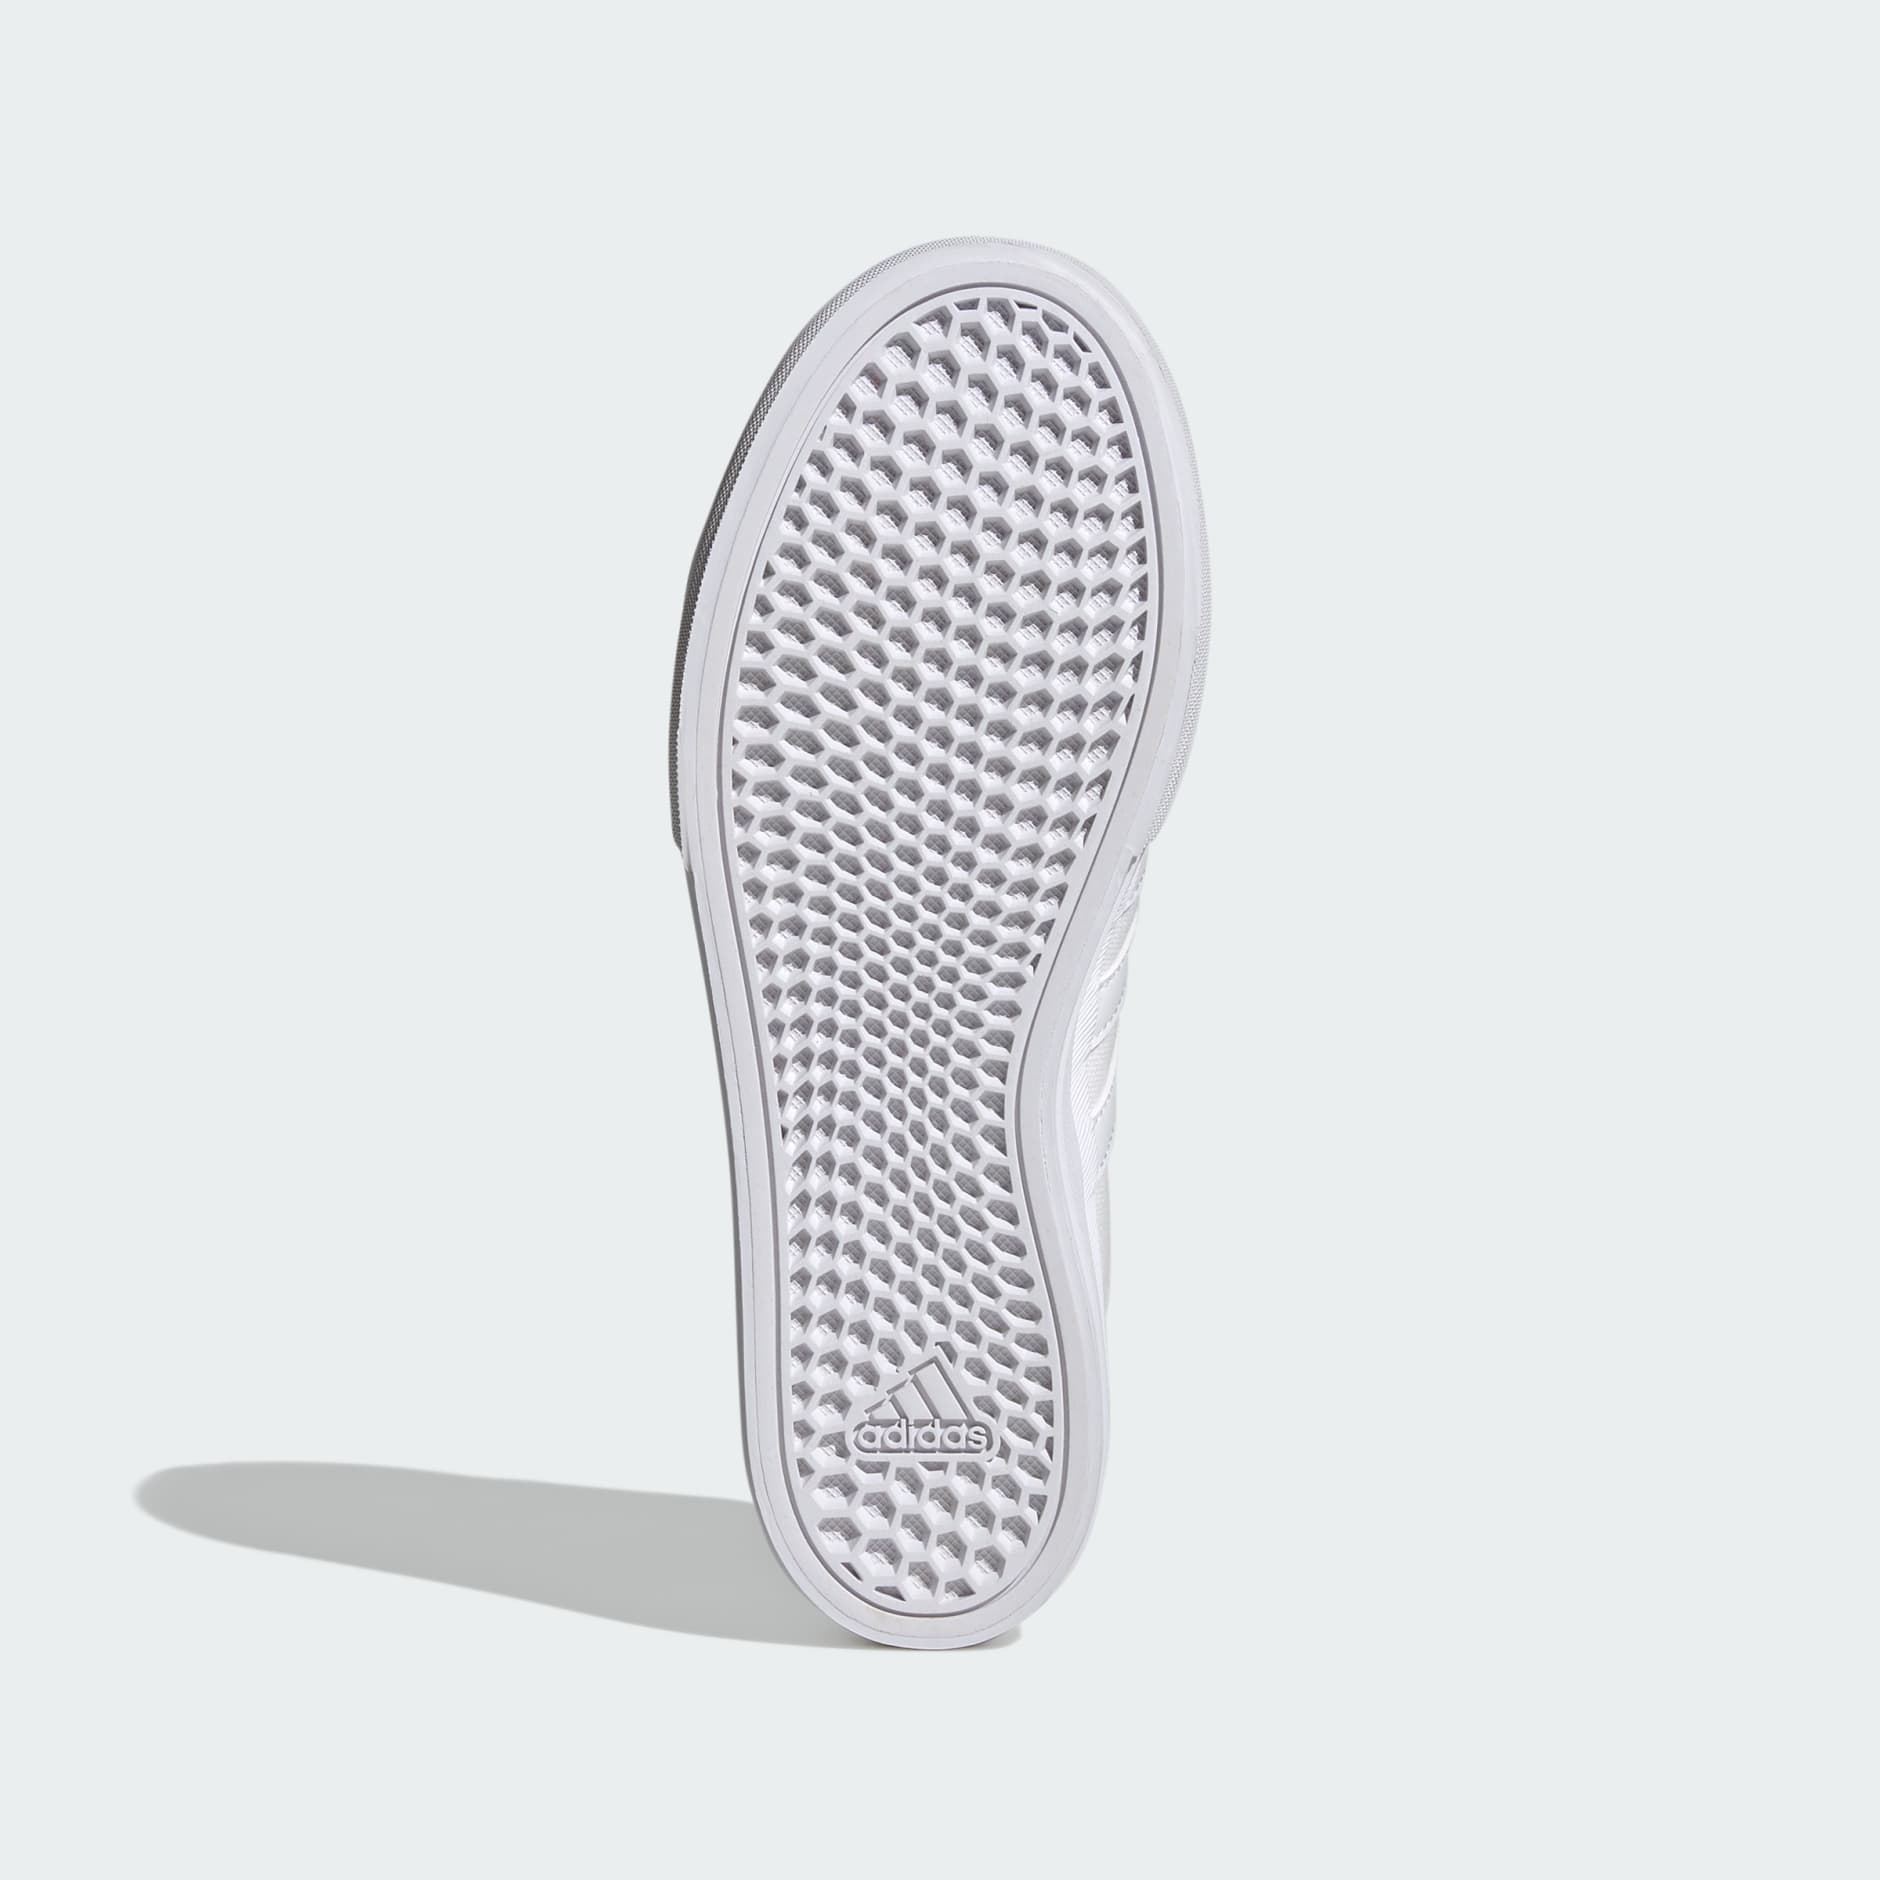 adidas Bravada 2.0 Platform Wonder Beige Cloue White Women Casual Shoes  IE2307